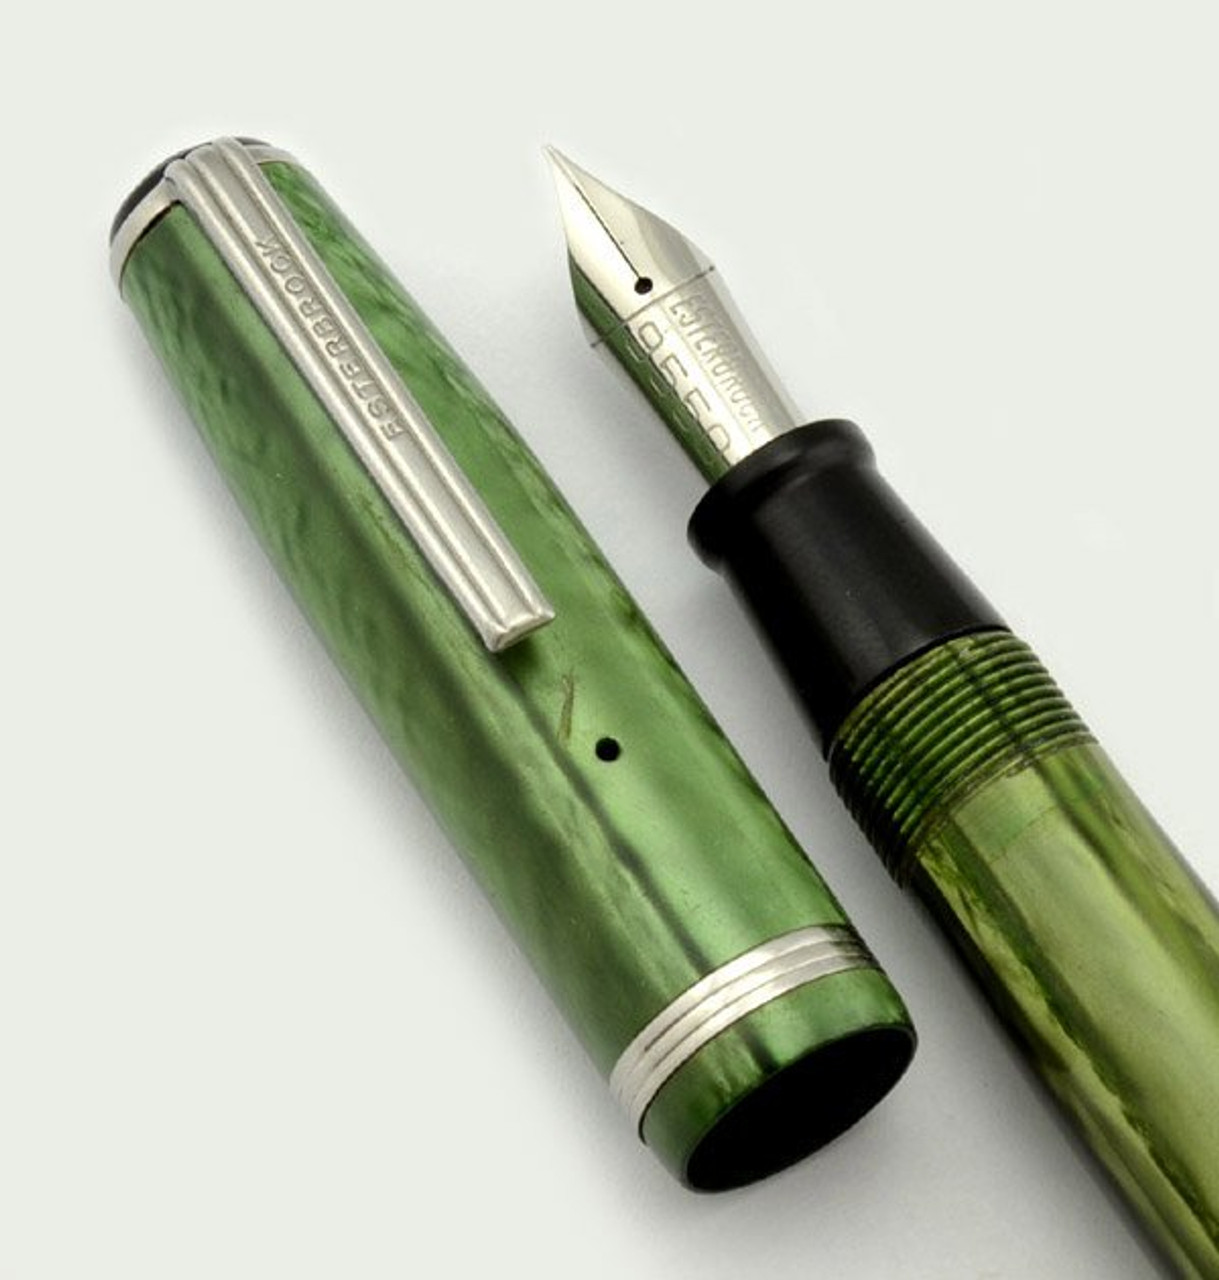 Esterbrook J Fountain Pen - Green, 9550 Extra Fine Nib (Very Nice, Restored)